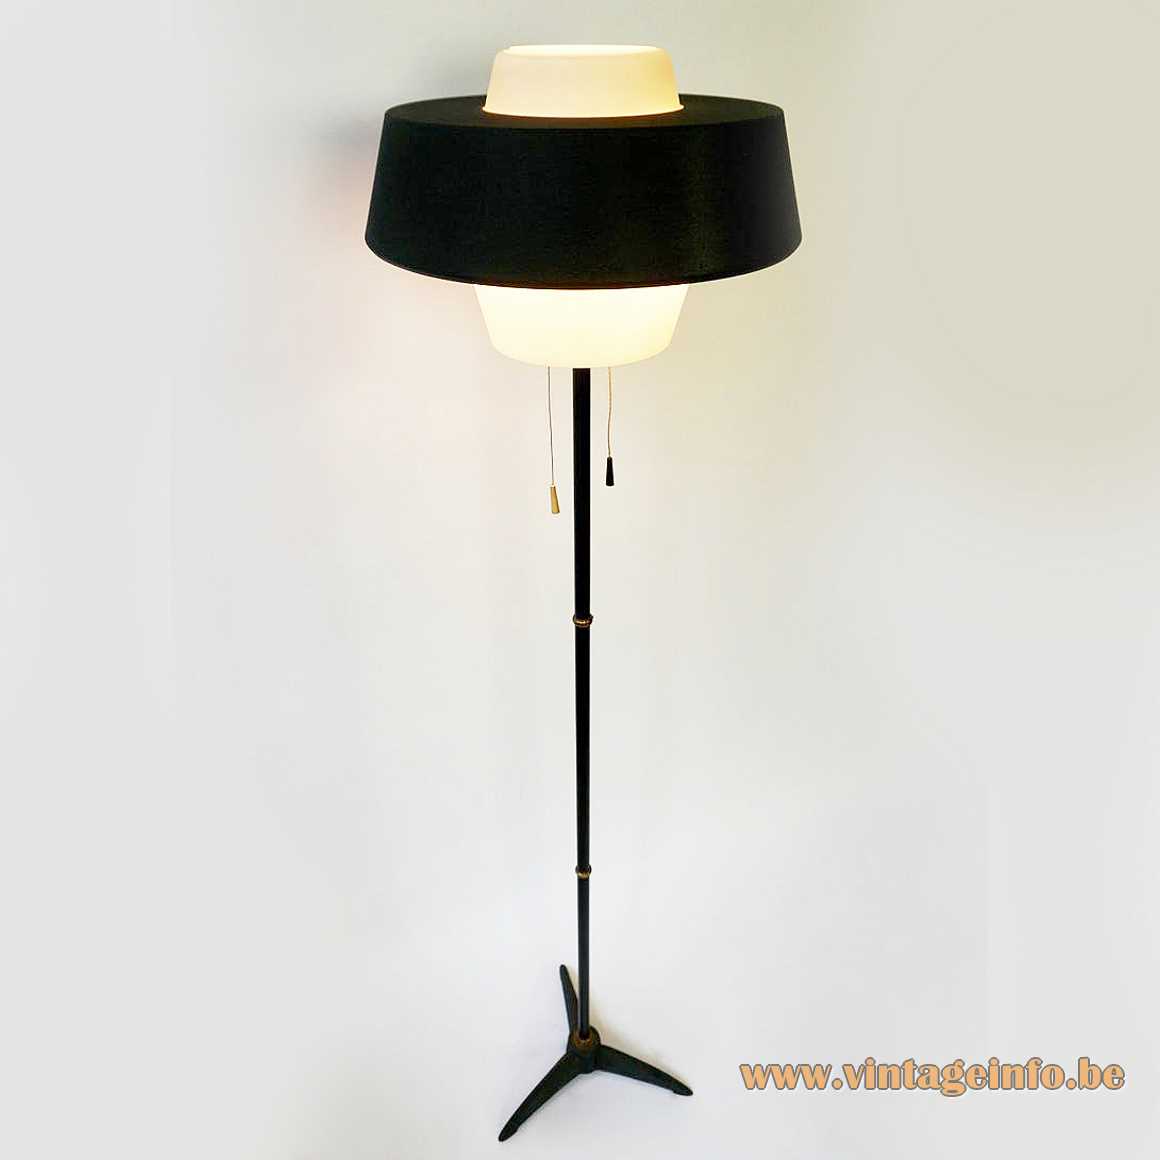 Louis Kalff NX 109 floor lamp black tripod base opal glass diffuser metal lampshade 1950s 1960s Philips